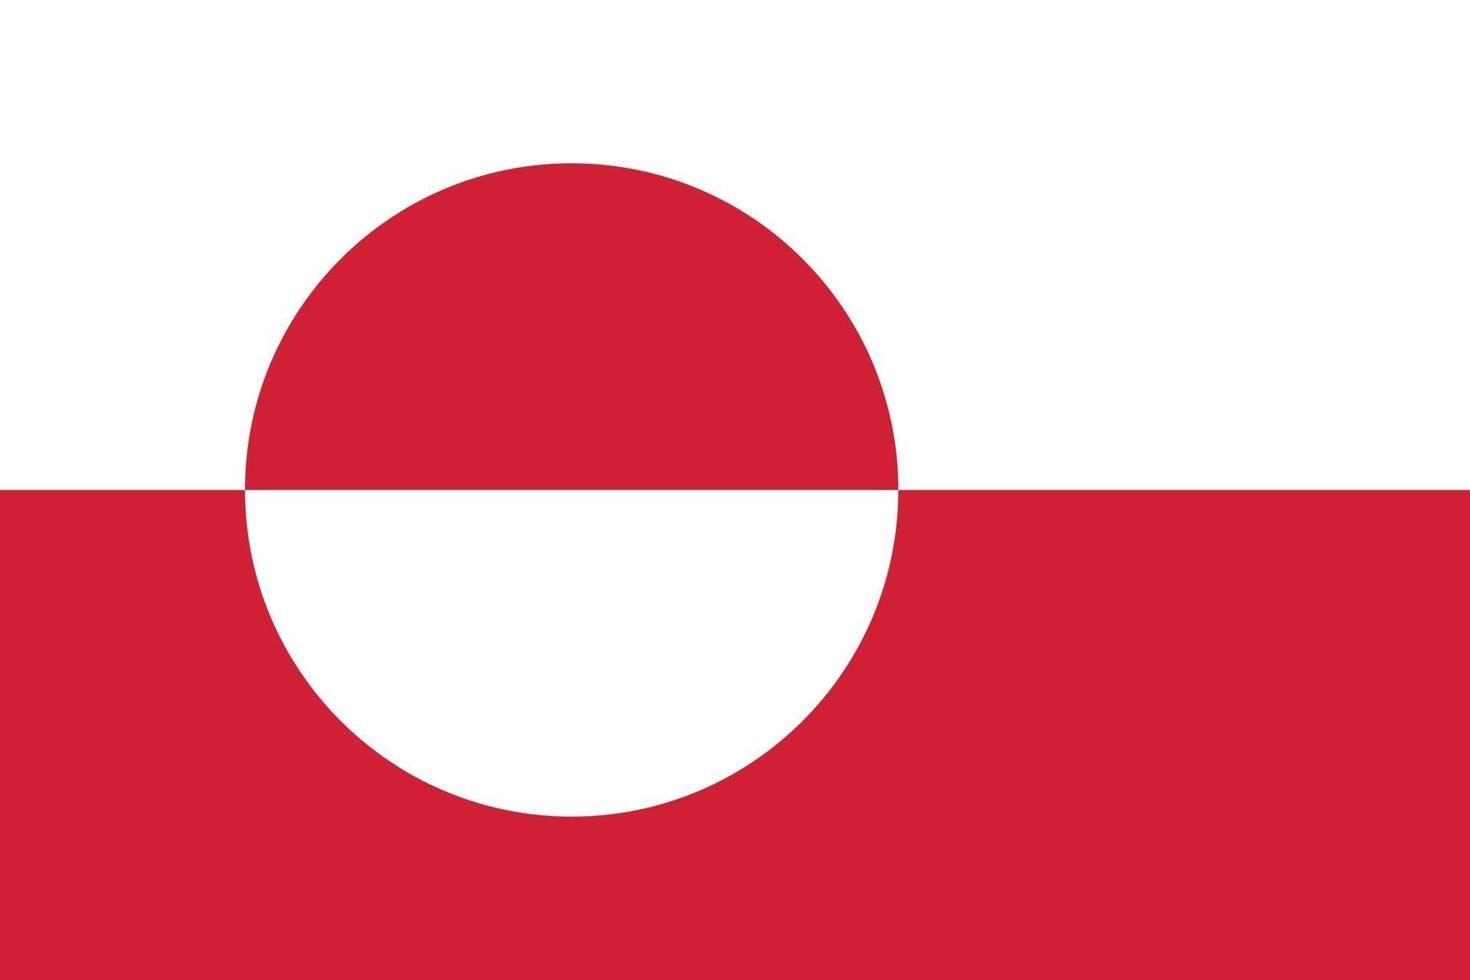 Greenland flag vector isolate banner print illustration